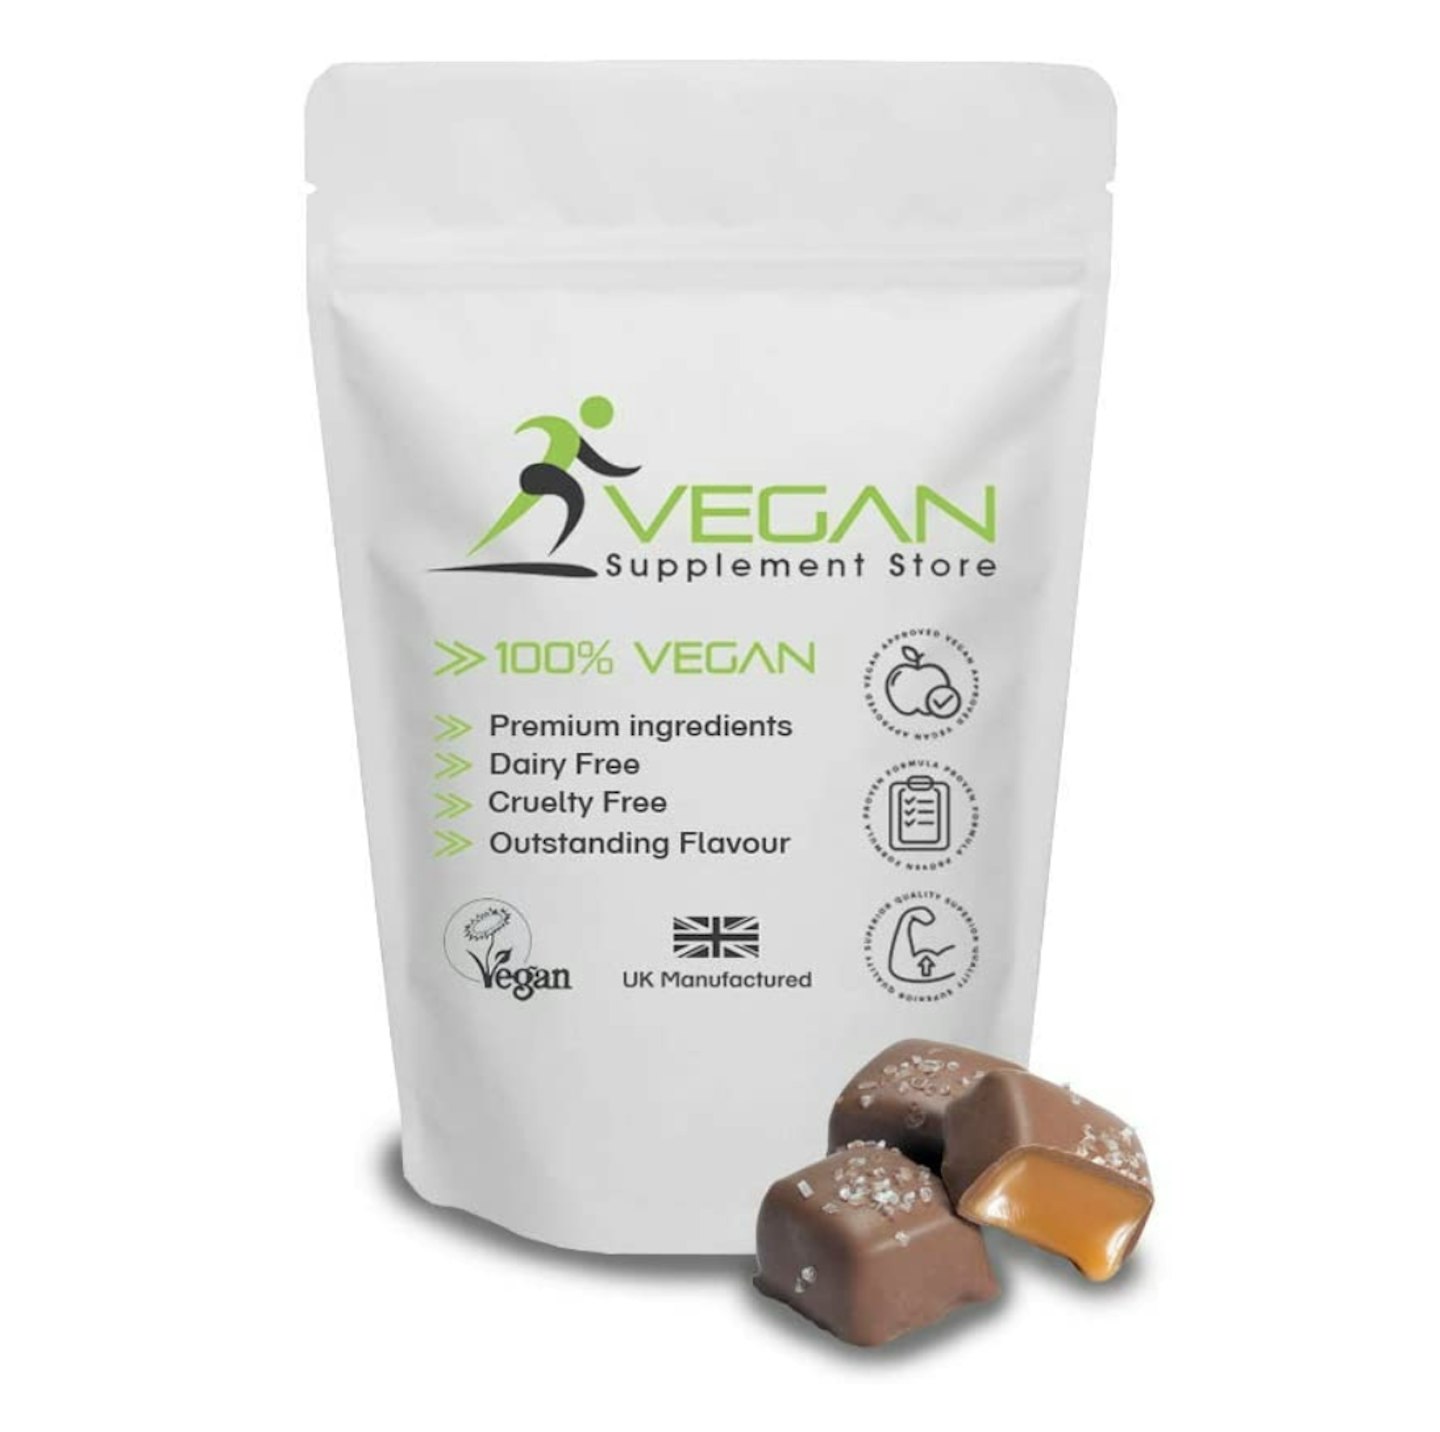 Vegan Supplement Store Vegan Powder in Salted Caramel